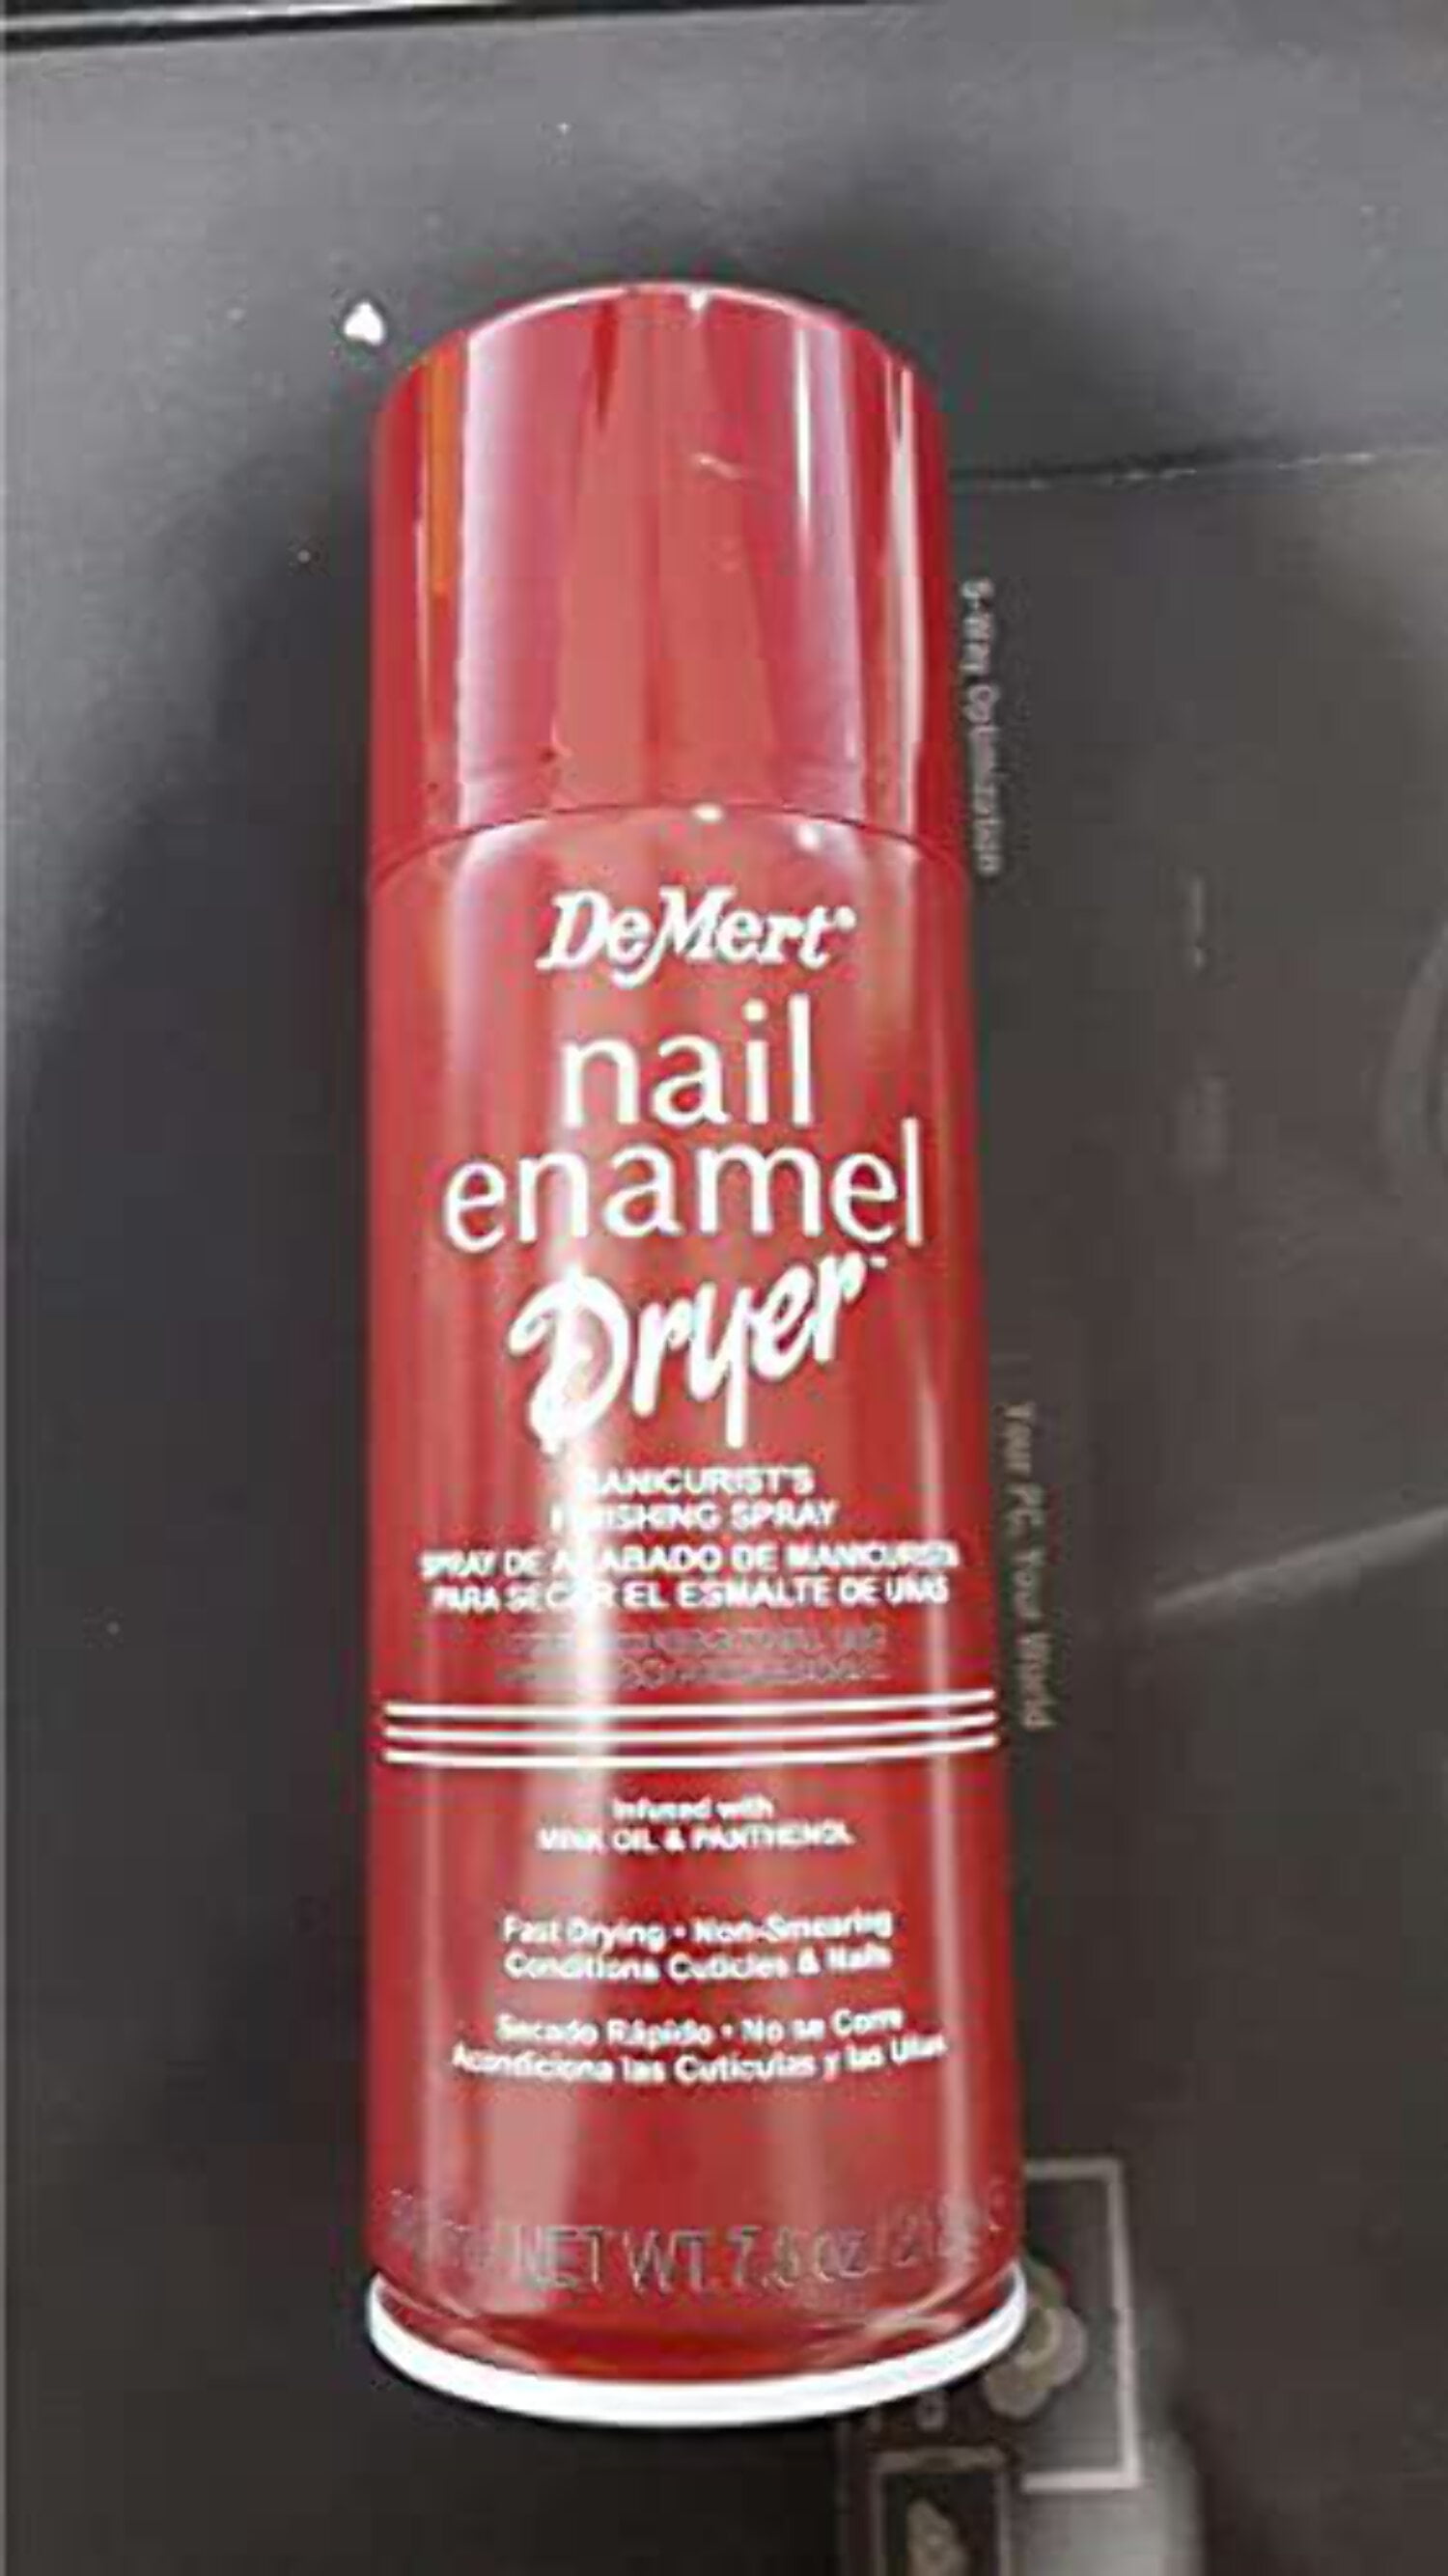 Demert Nail Enamel Dryer-7.5 oz - Walmart.com